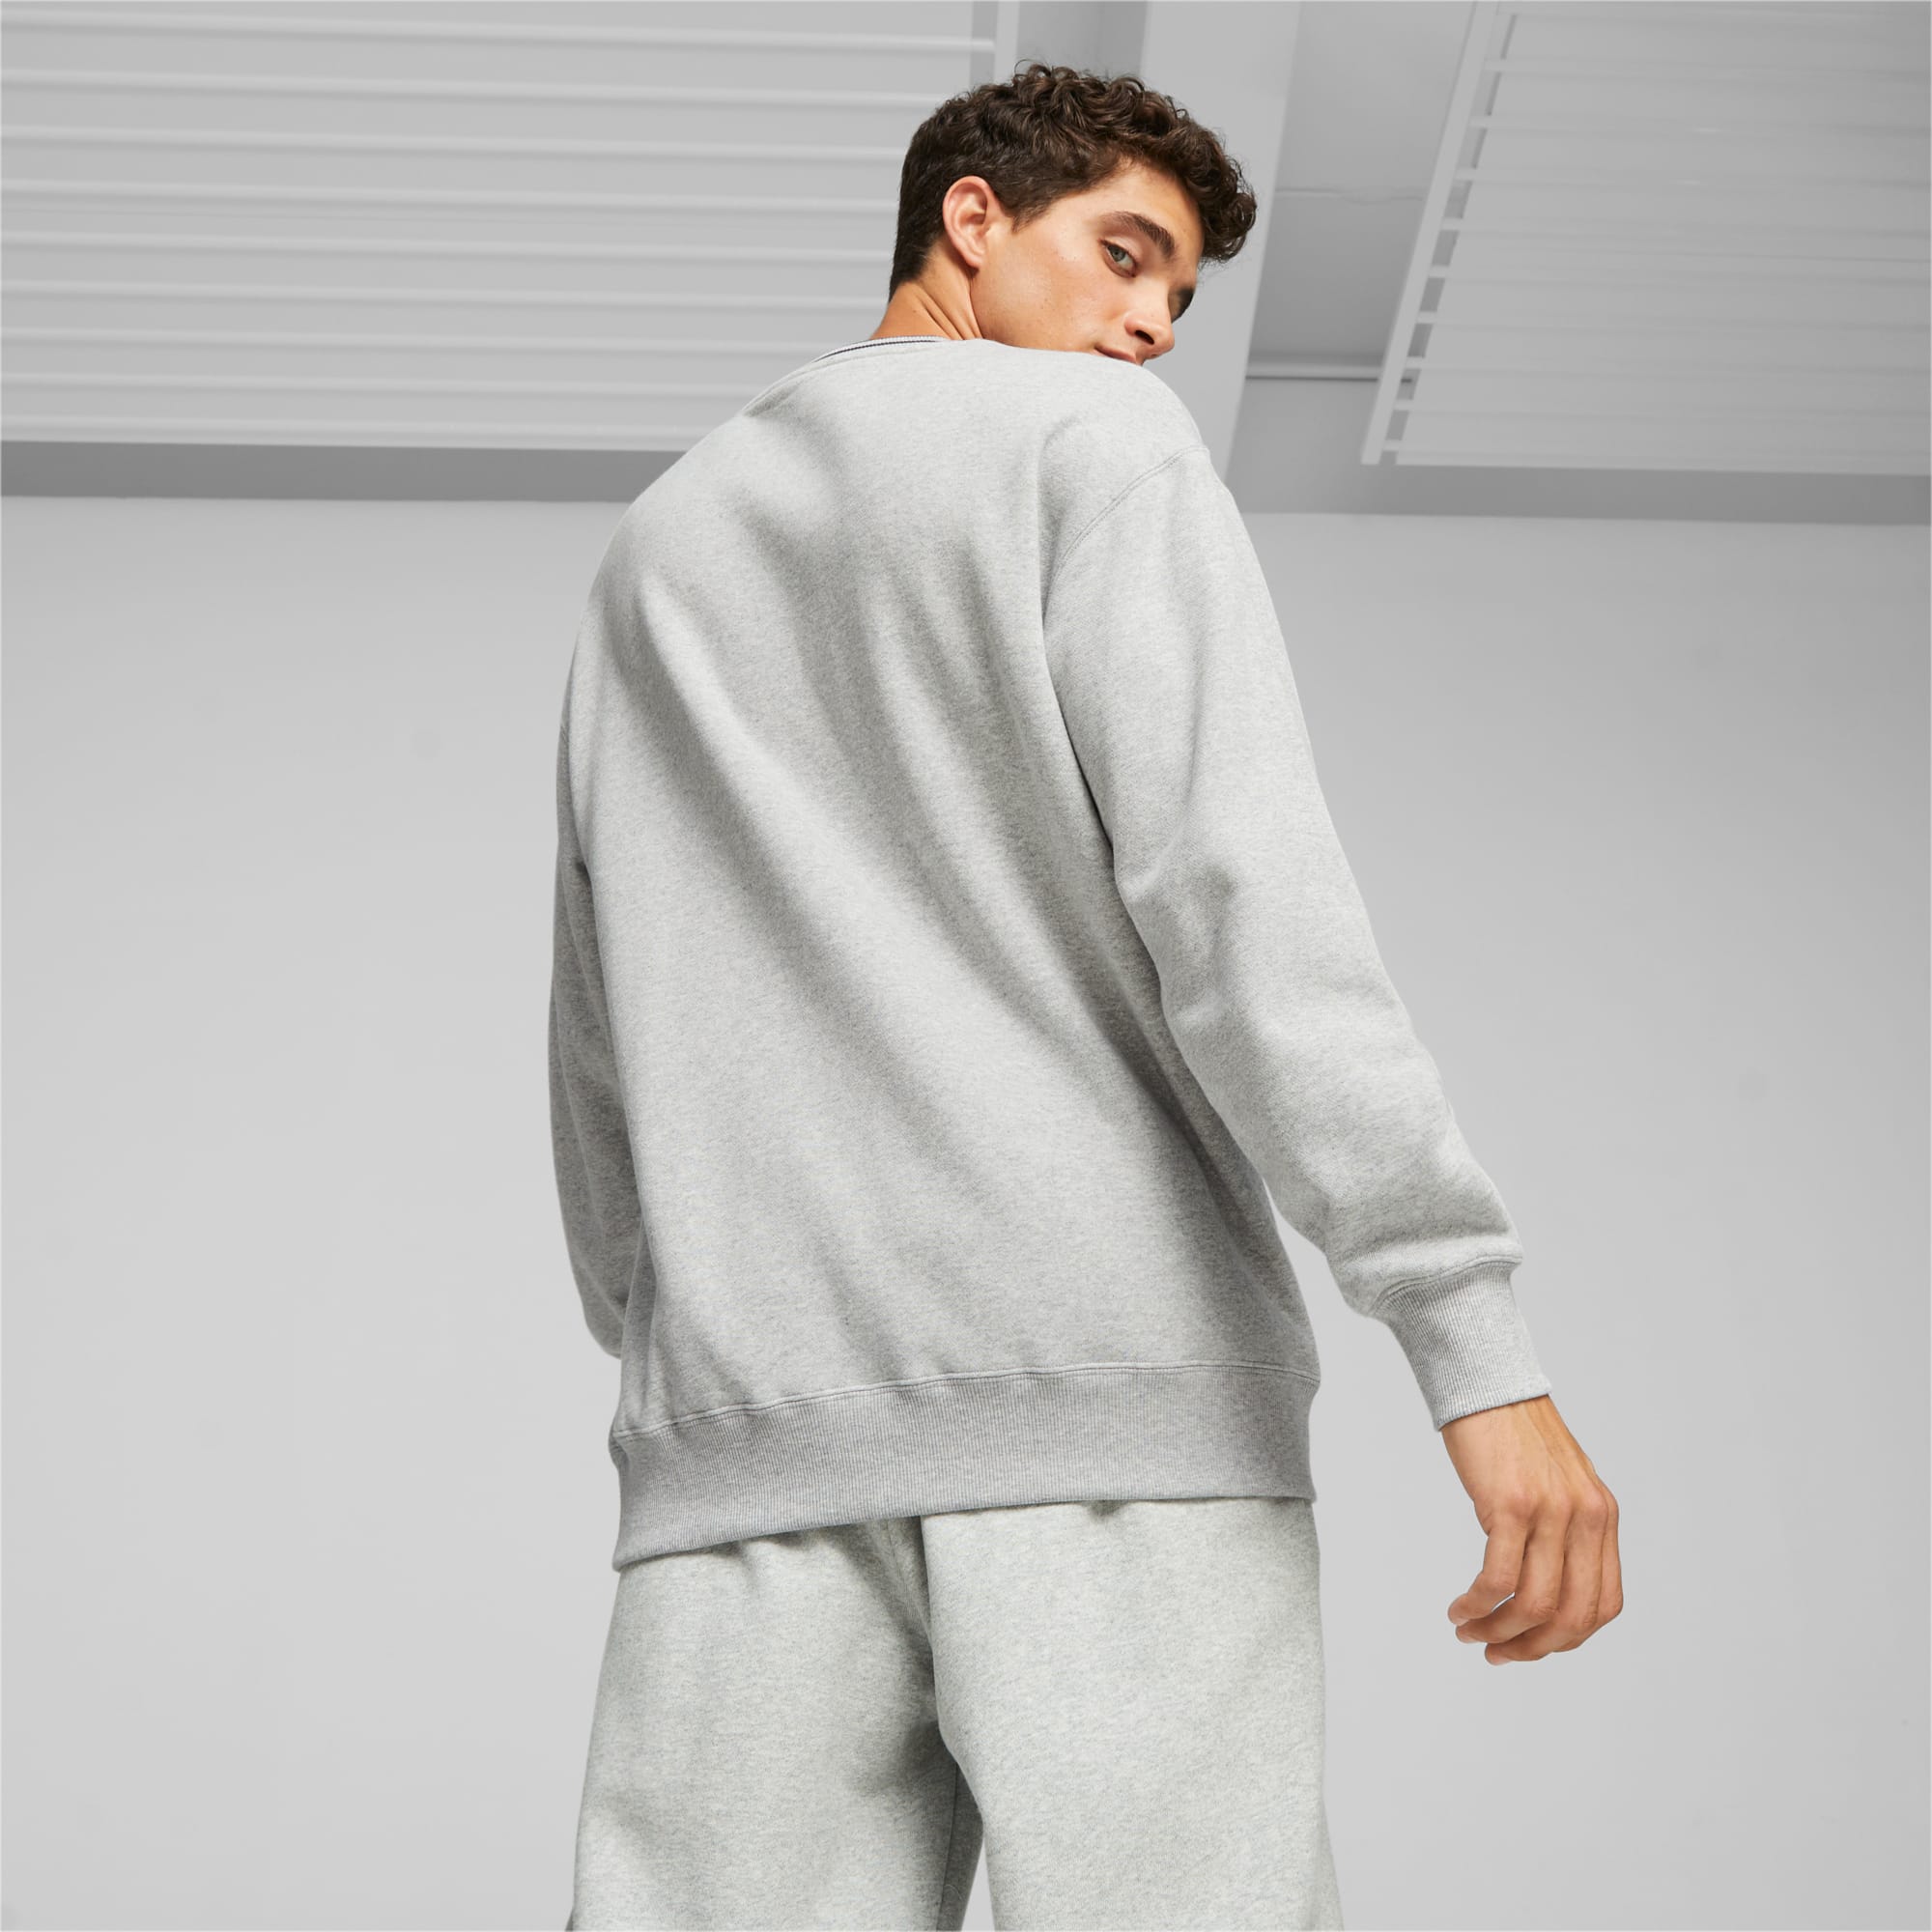 PUMA X Staple Men's Sweatshirt, Light Grey Heather, Size XS, Clothing